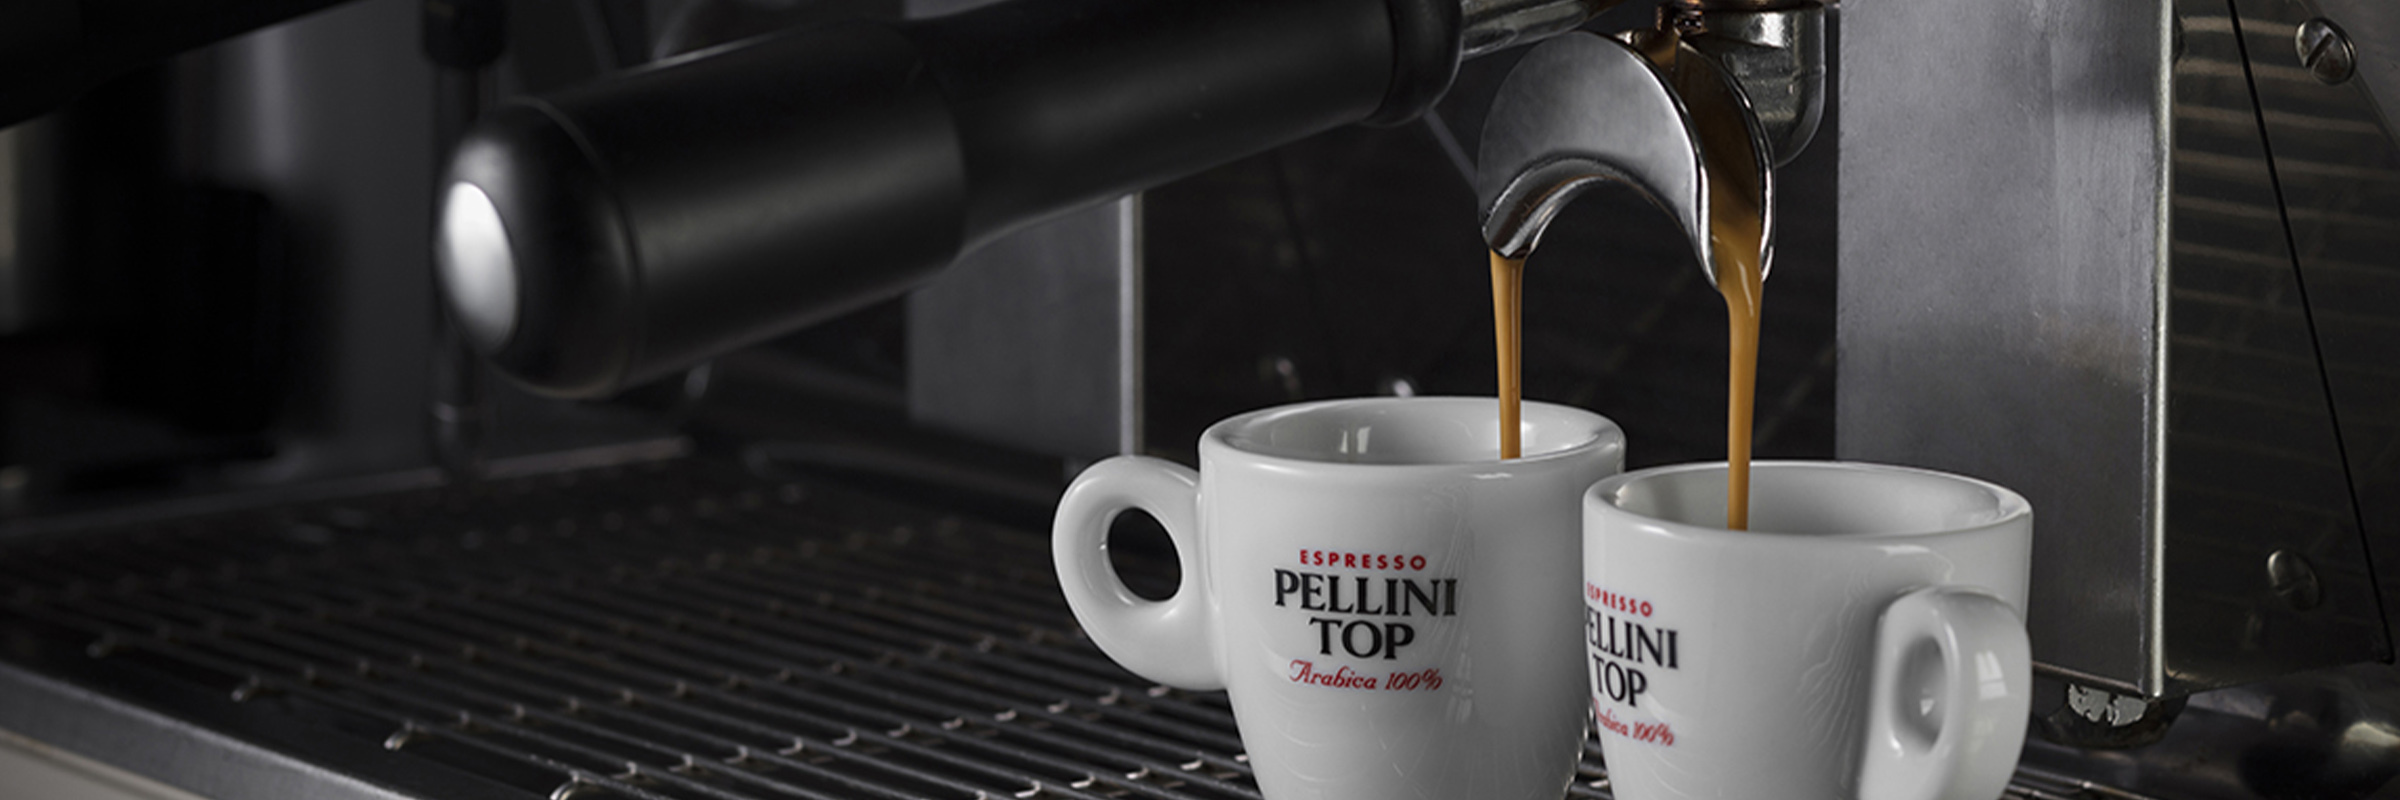 Pellini Italian coffee: the authentic Italian Espresso - Shop online